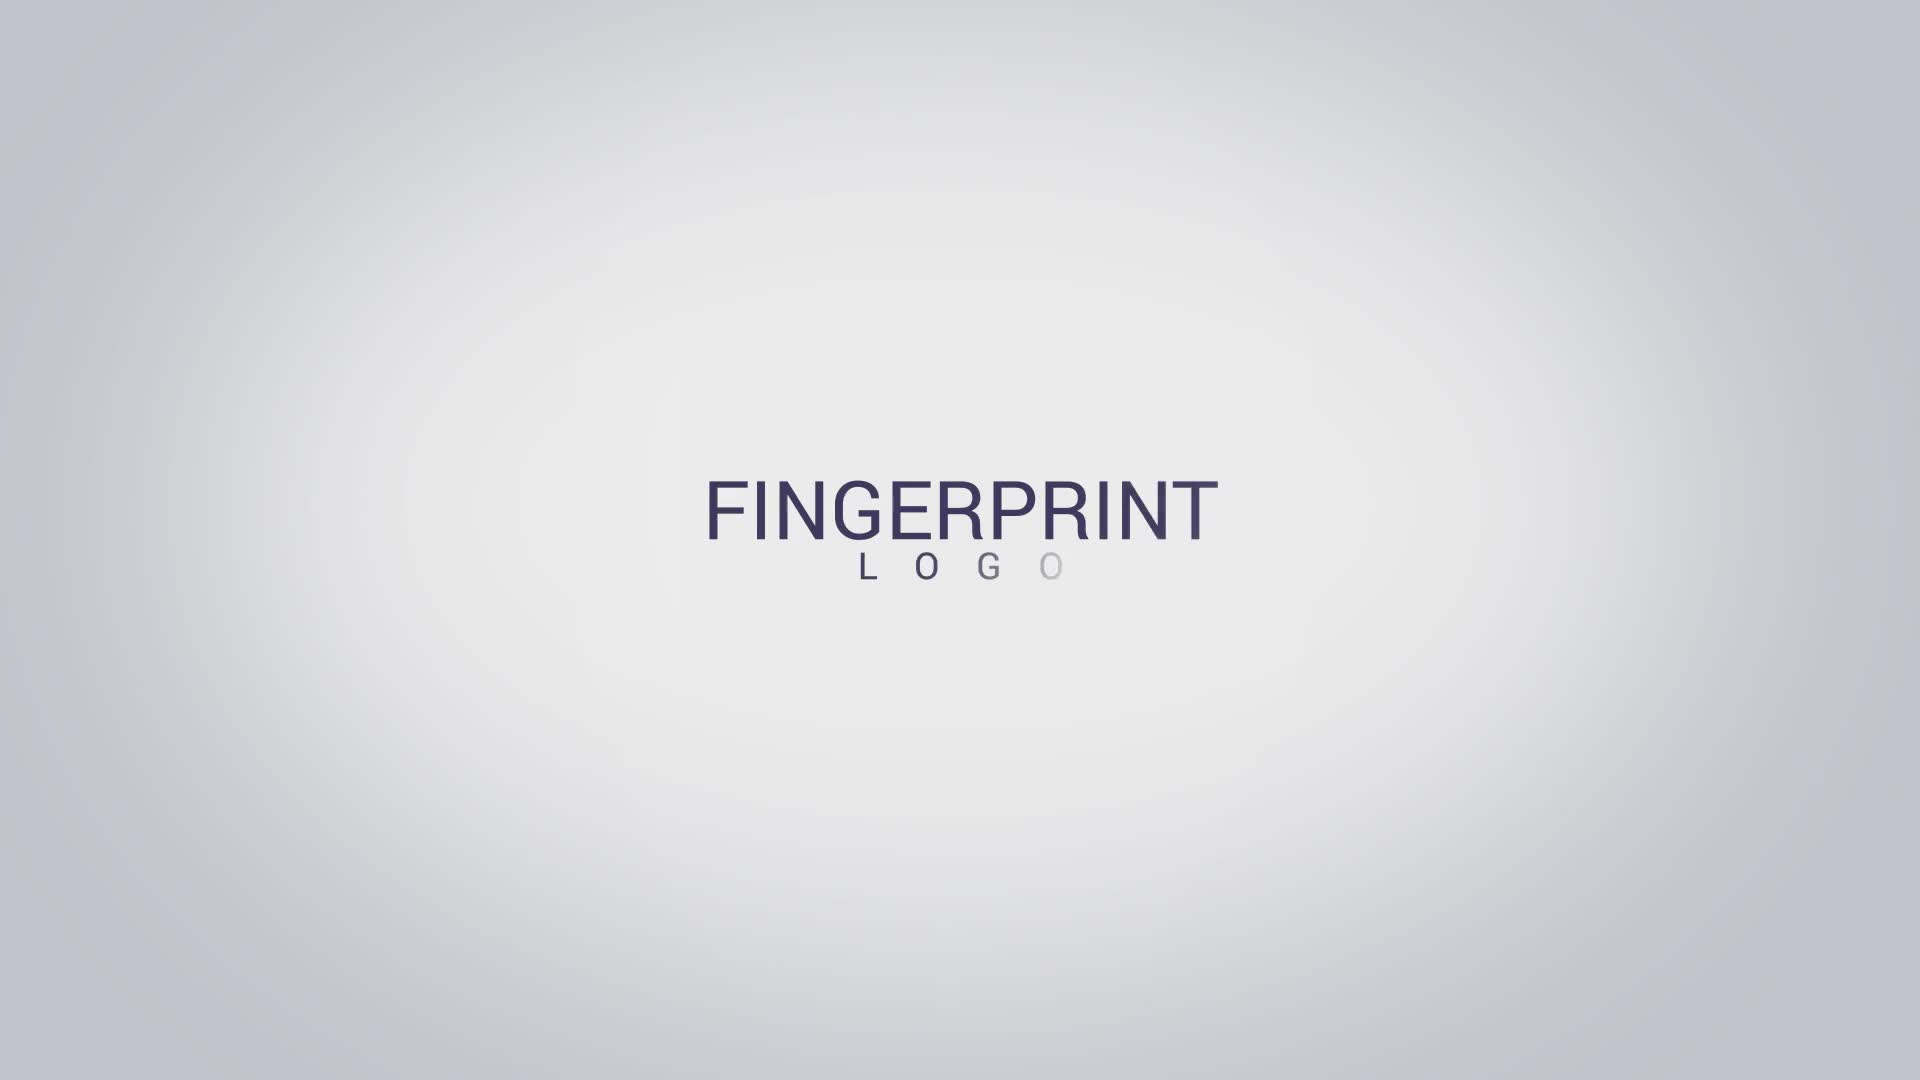 Fingerprint logo | Premiere Pro Videohive 24594491 Premiere Pro Image 1